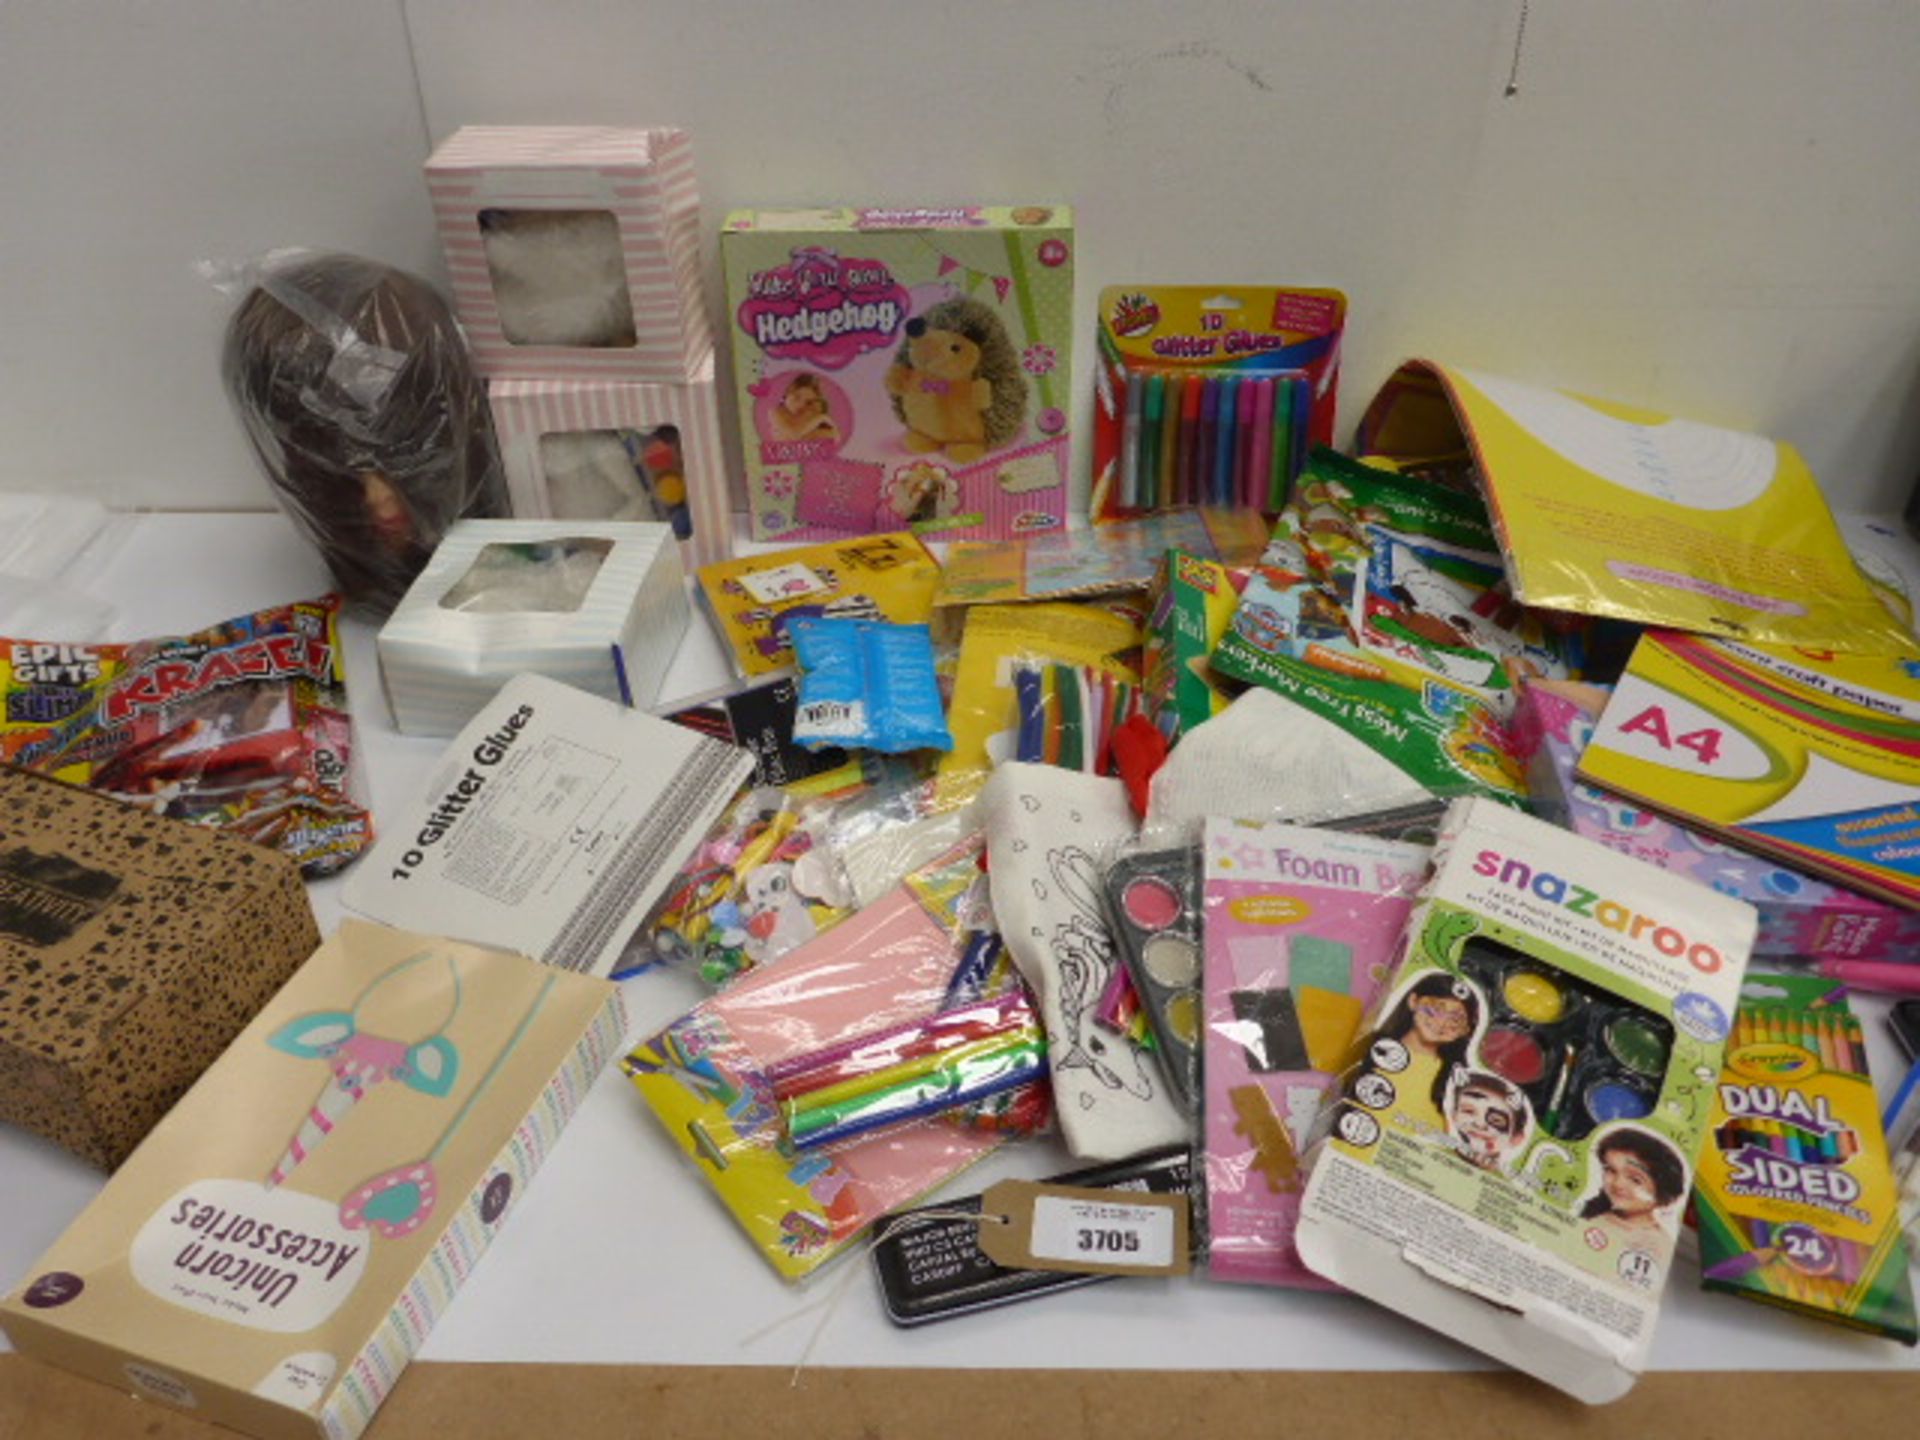 Glitter glue, colouring pens, pencils, Sketch pad, craft packs, activity magazines, paints,